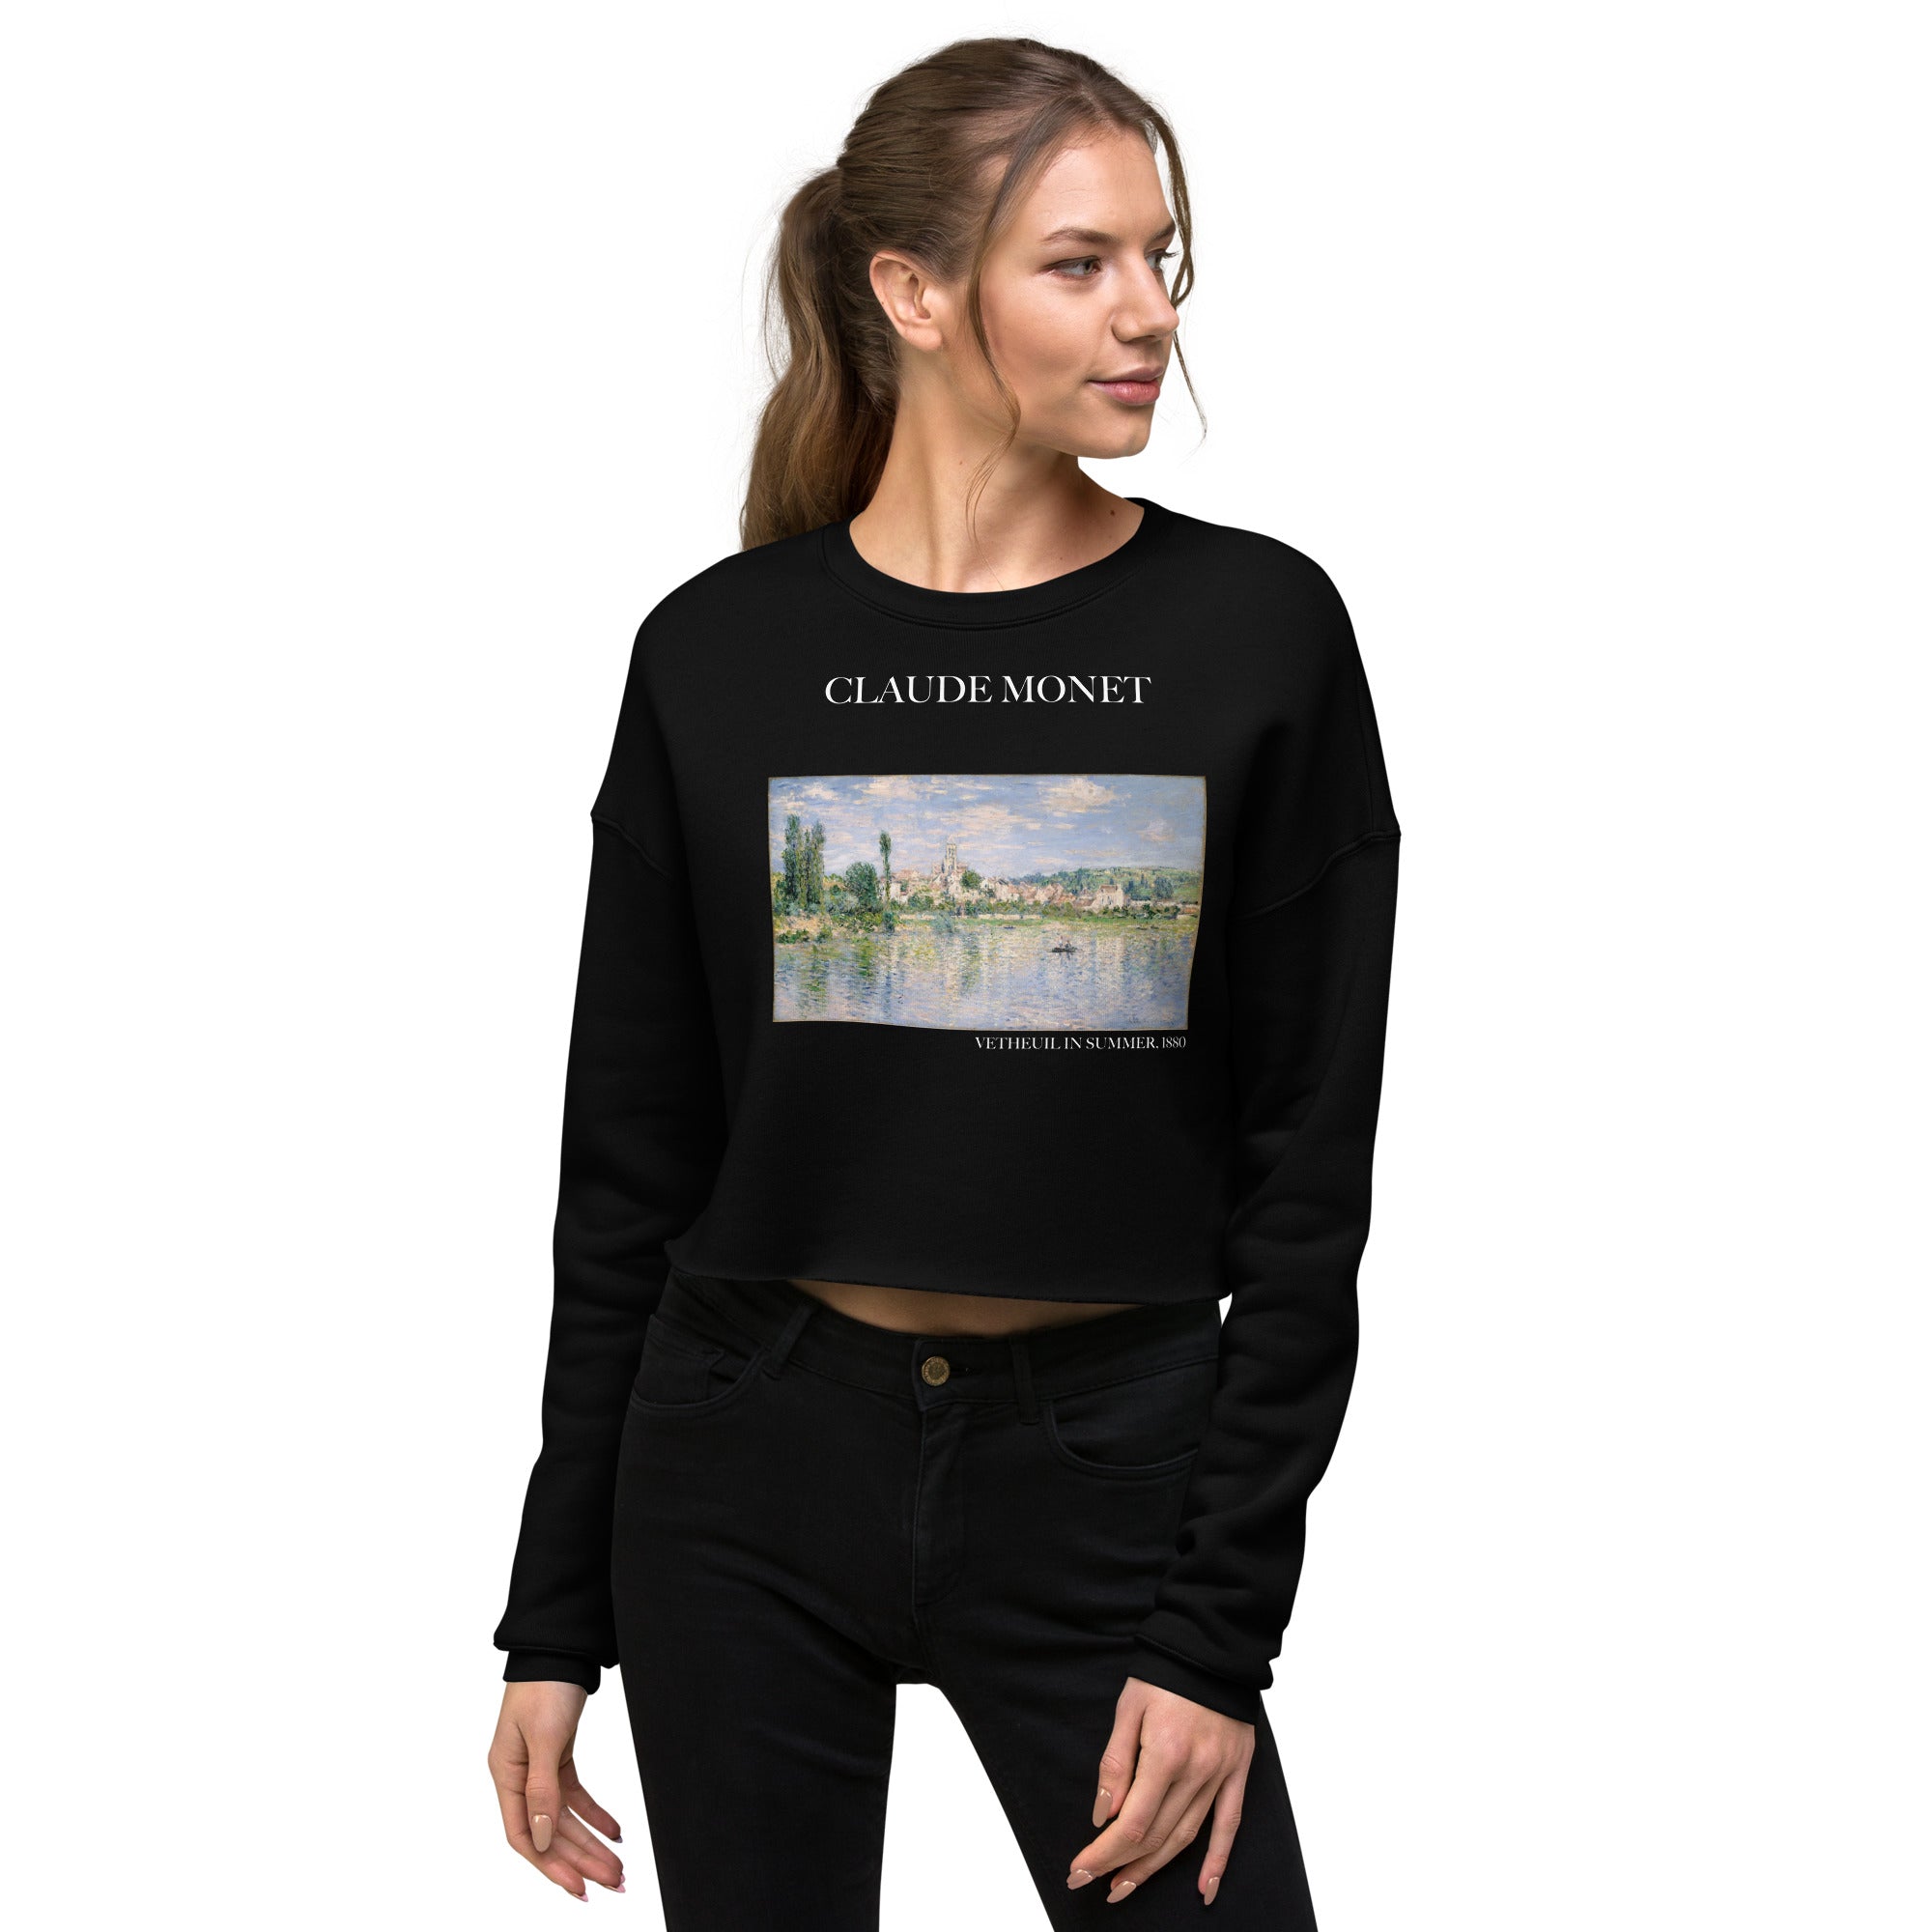 Claude Monet 'Vetheuil in Summer' Famous Painting Cropped Sweatshirt | Premium Art Cropped Sweatshirt